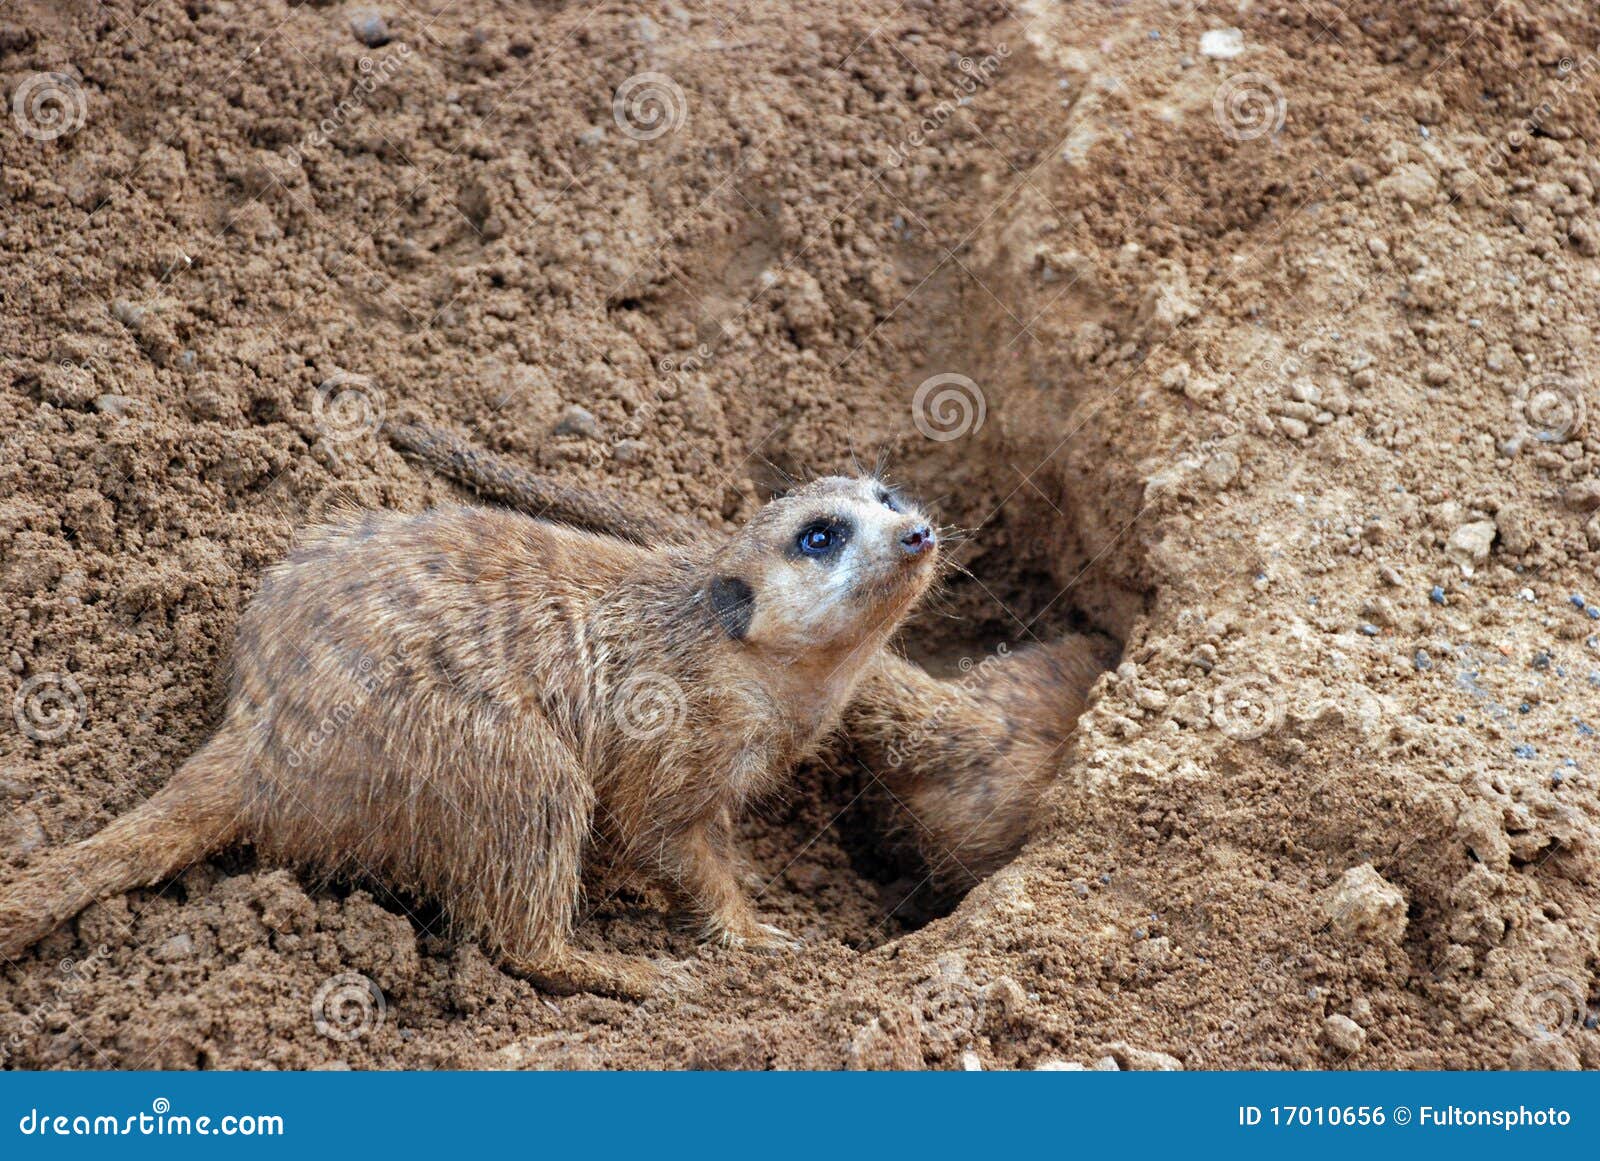 Burrowing Meerkat Mongoose stock photo. Image of africa - 17010656